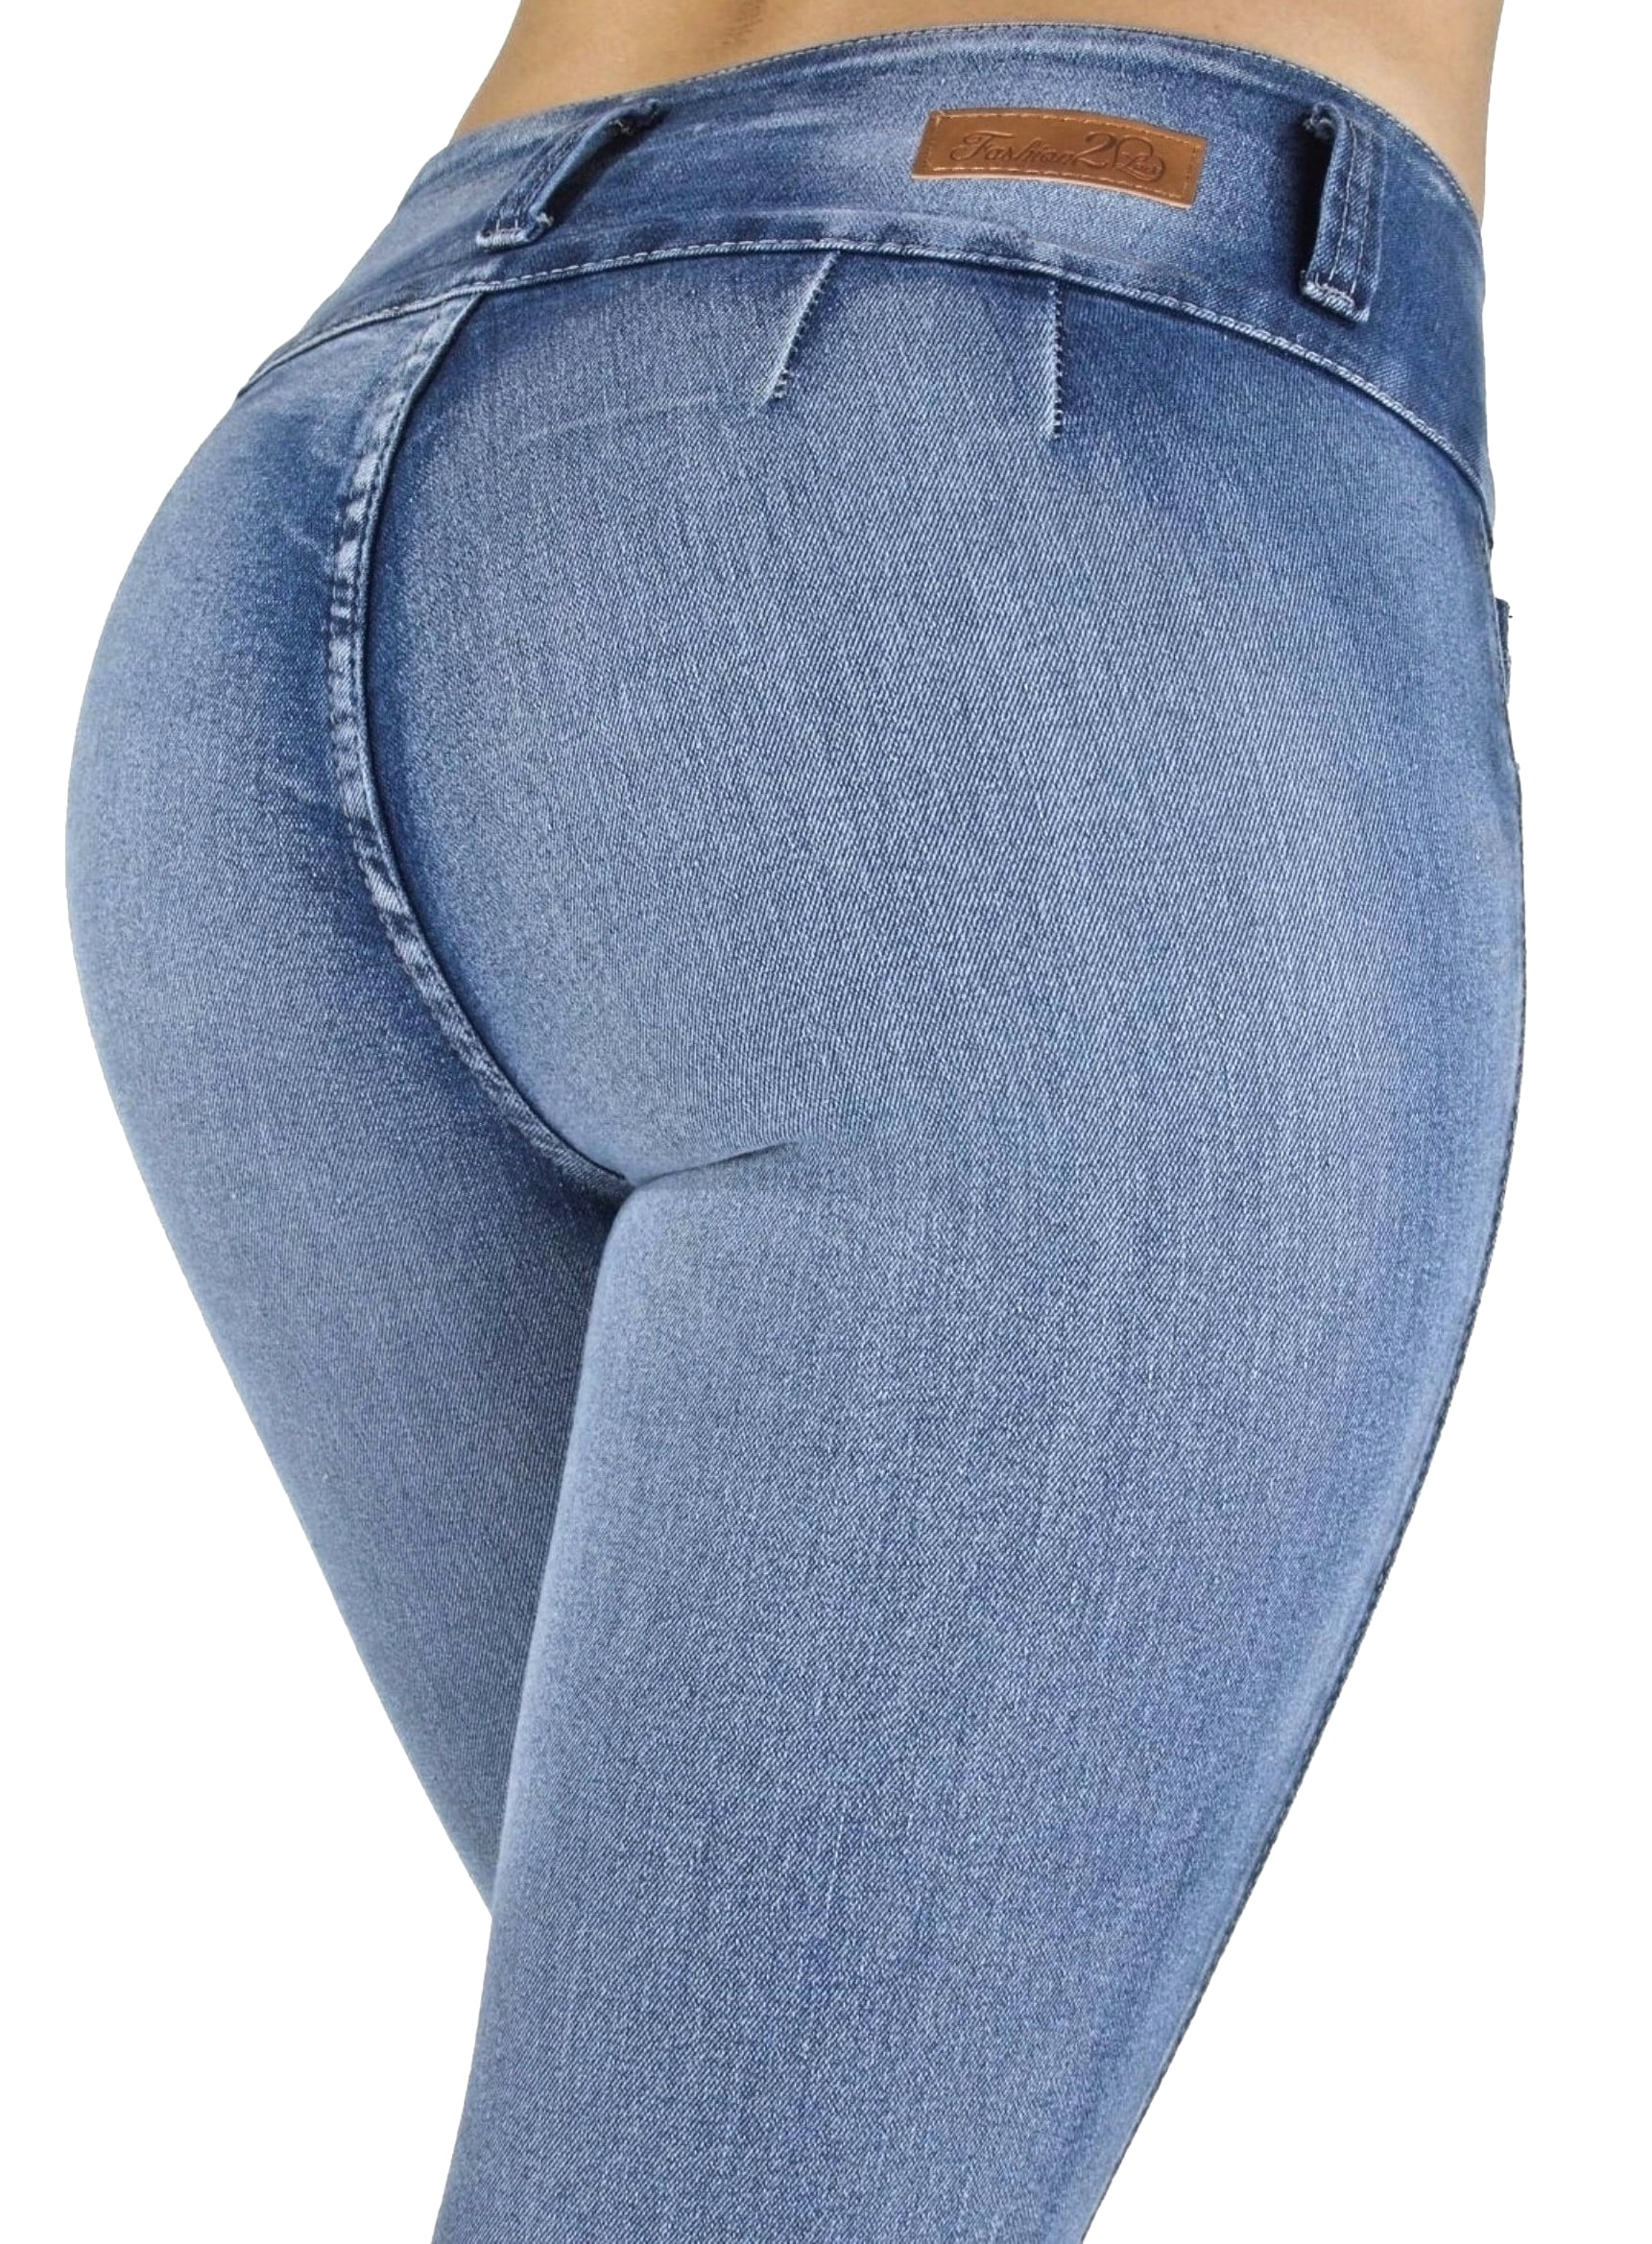 Walmart Tight Jeans Ass Booty